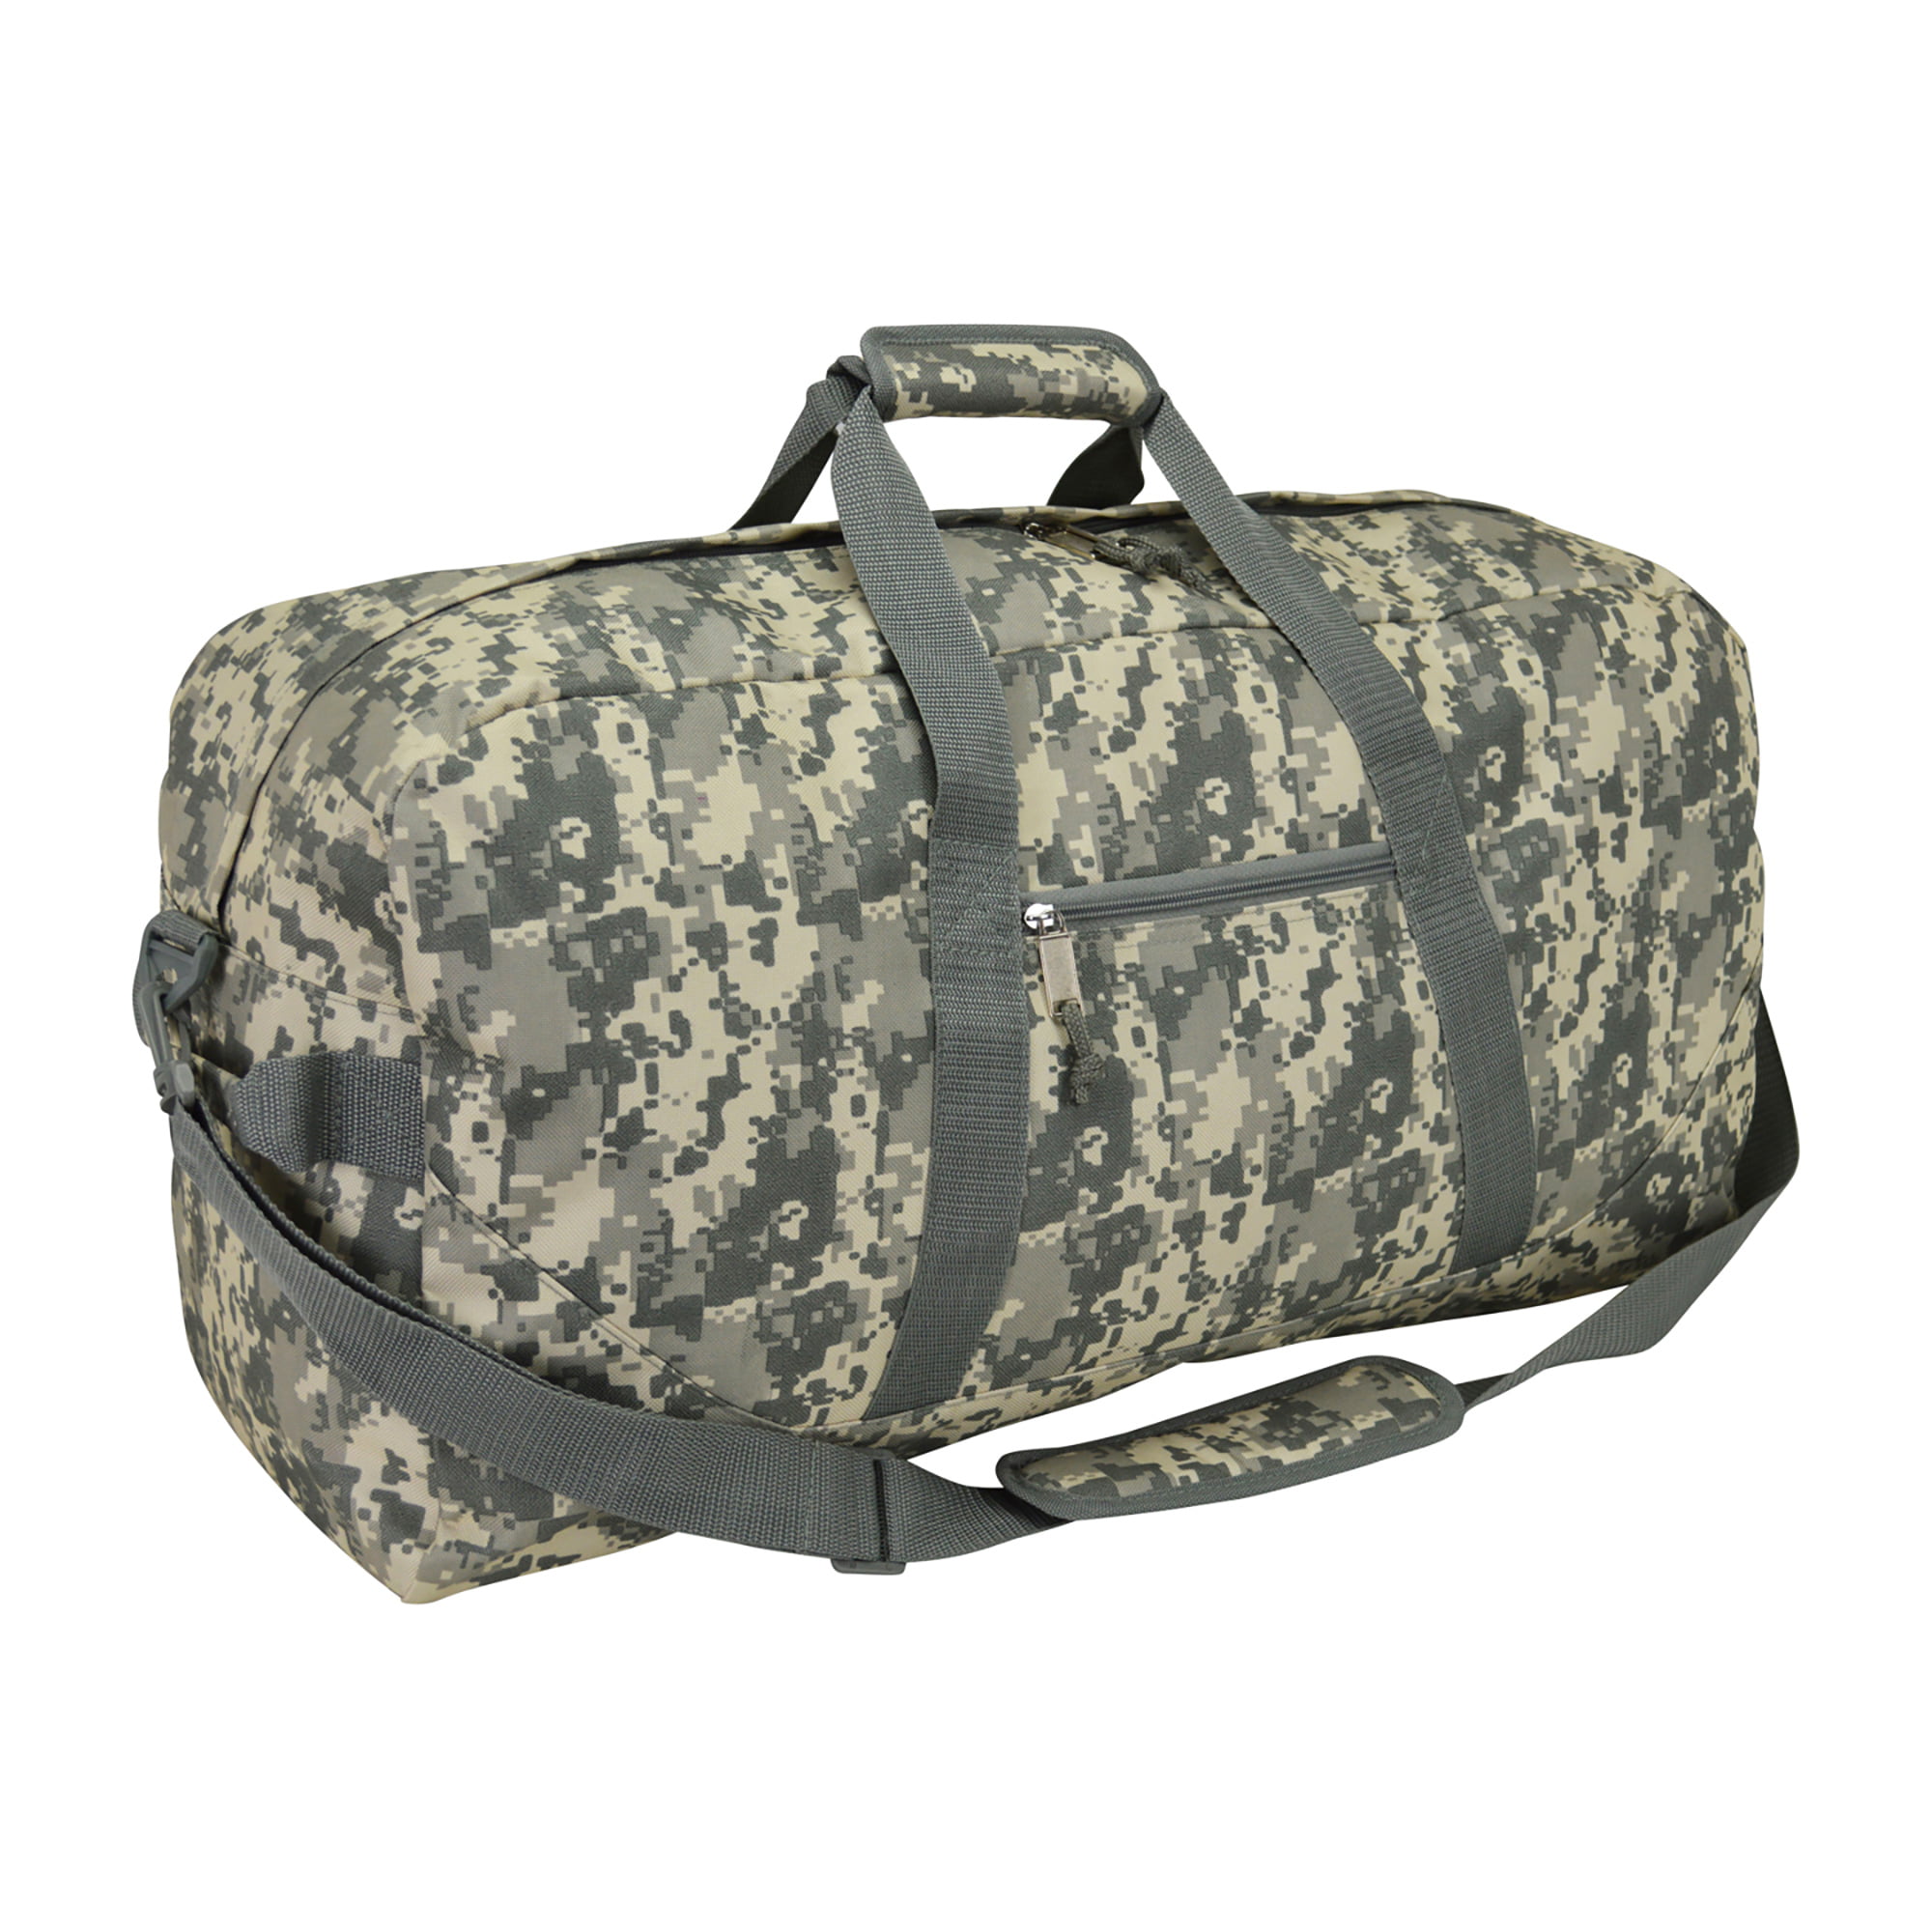 21 Large Duffle Bag with Adjustable Strap in Digital Camouflage - nrd.kbic-nsn.gov - nrd.kbic-nsn.gov